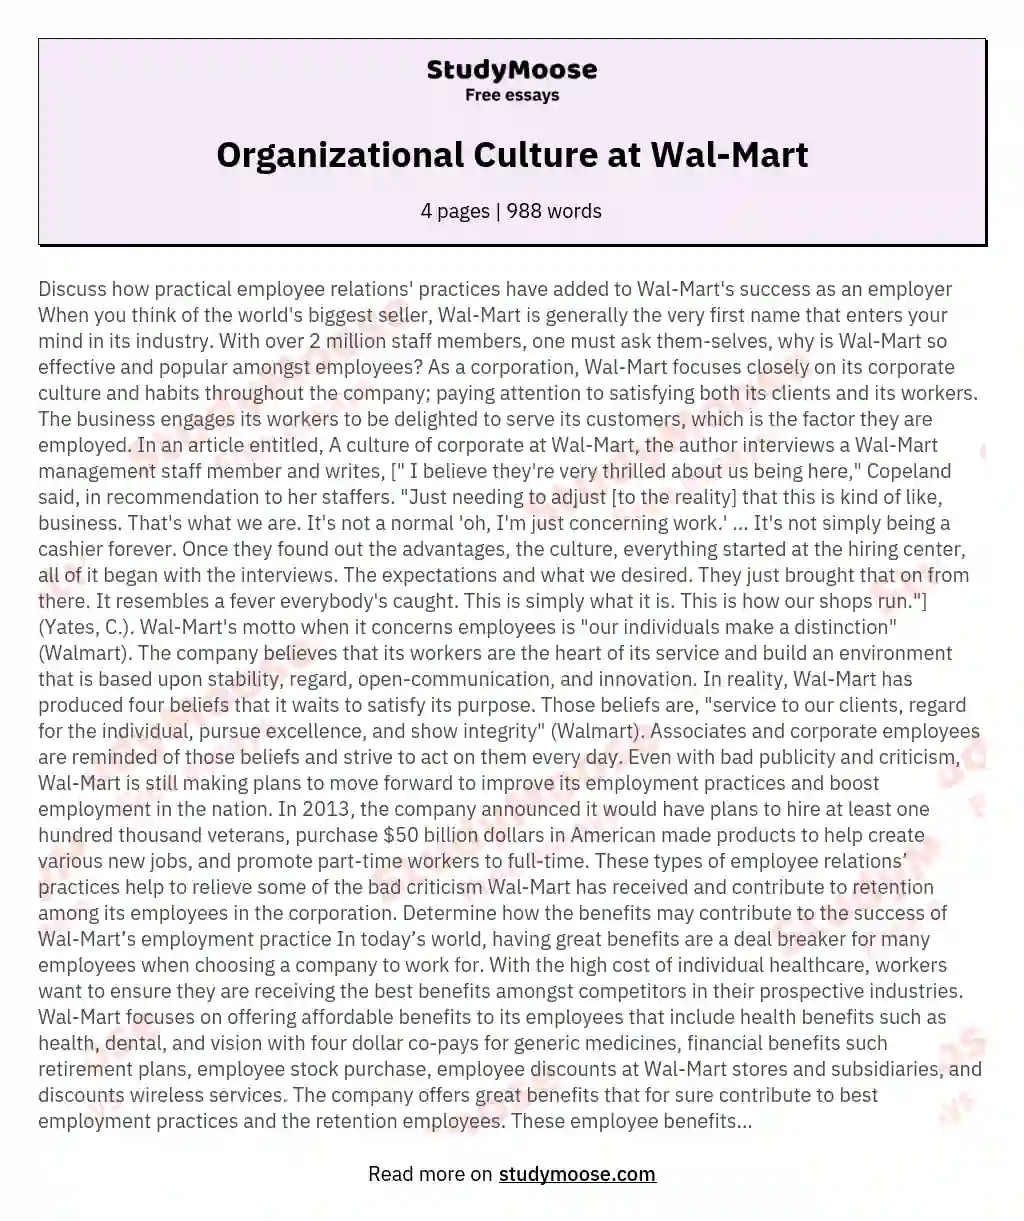 Organizational Culture at Wal-Mart essay